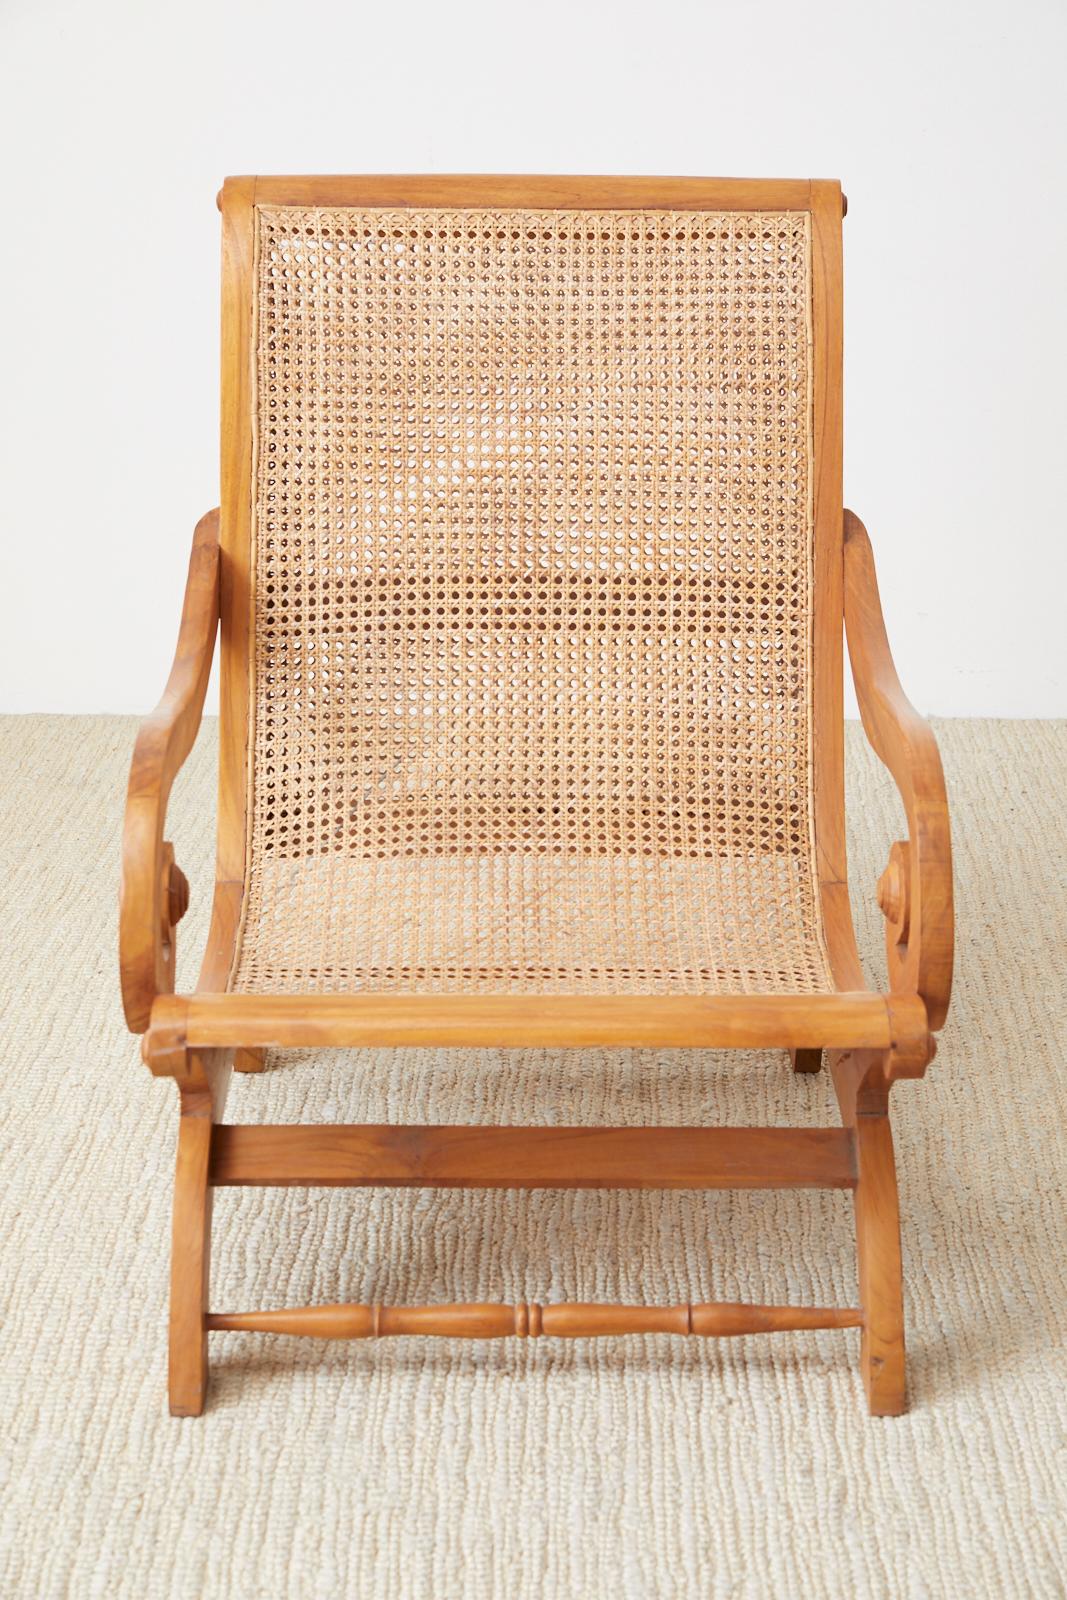 teak plantation chairs